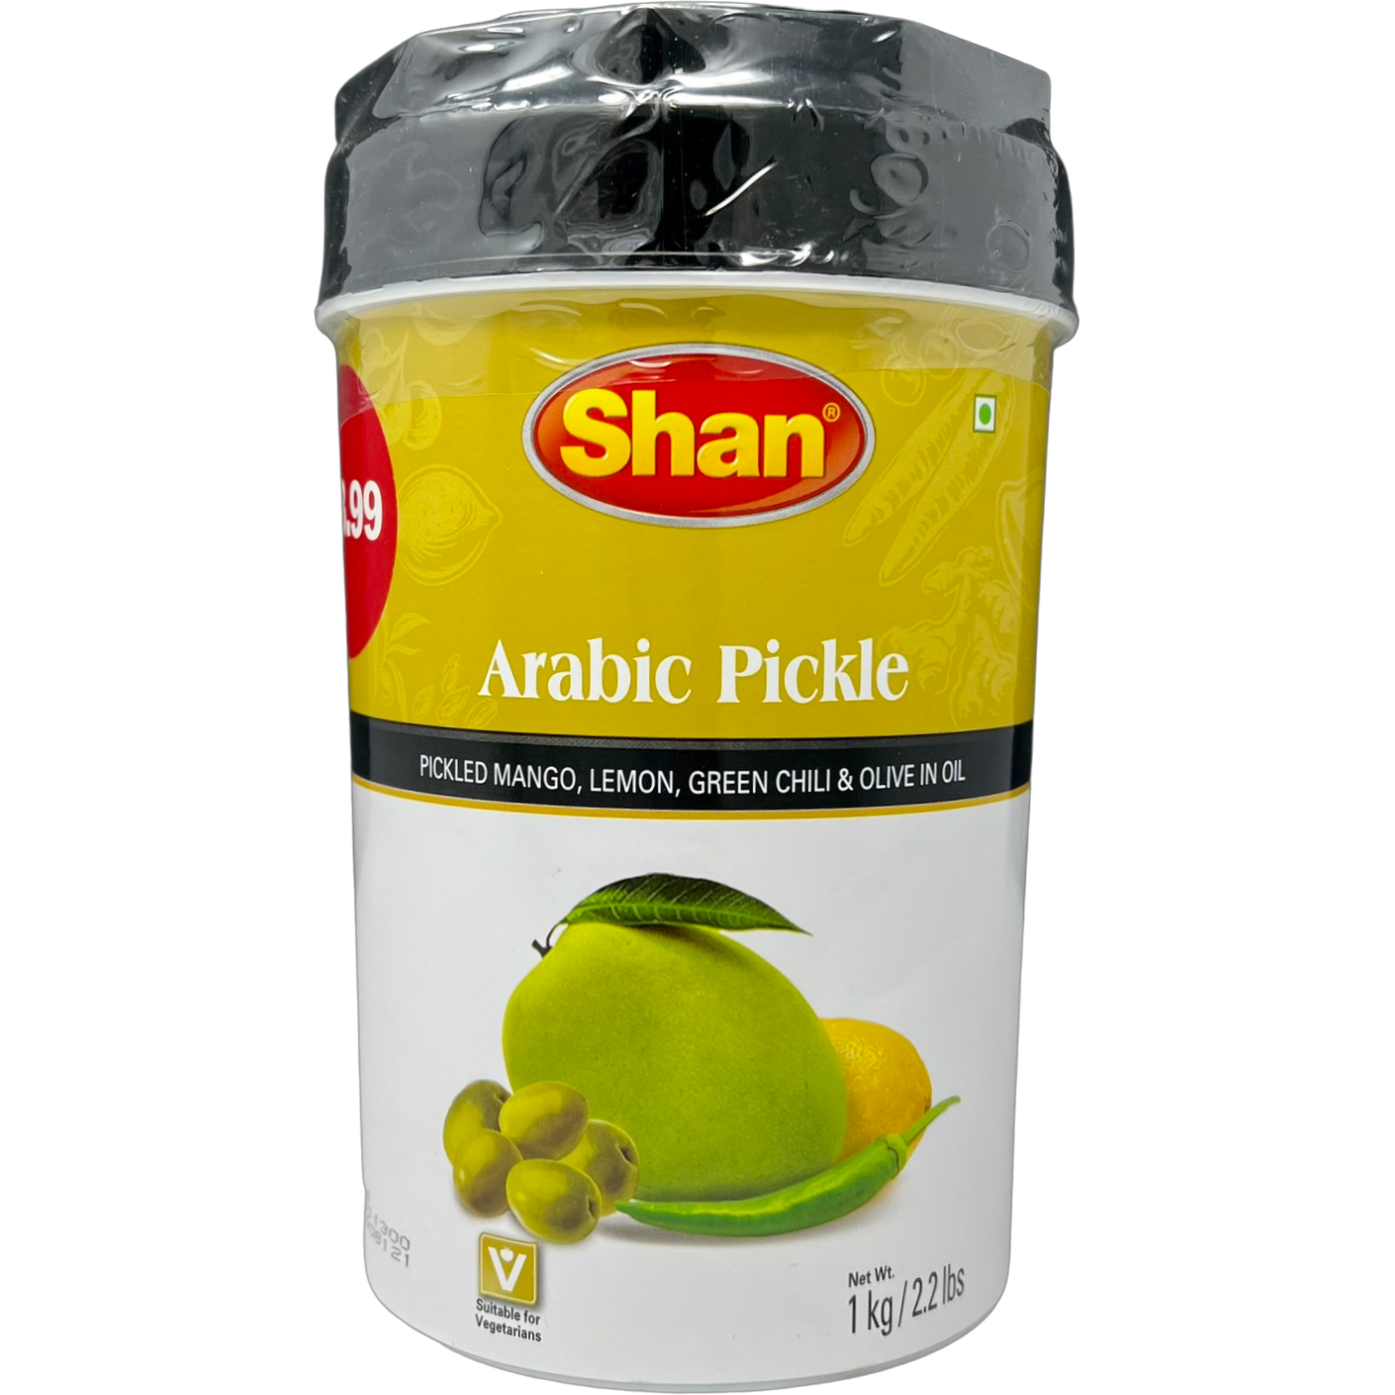 Shan Arabic Pickle - 1 Kg (2.2 Lb)